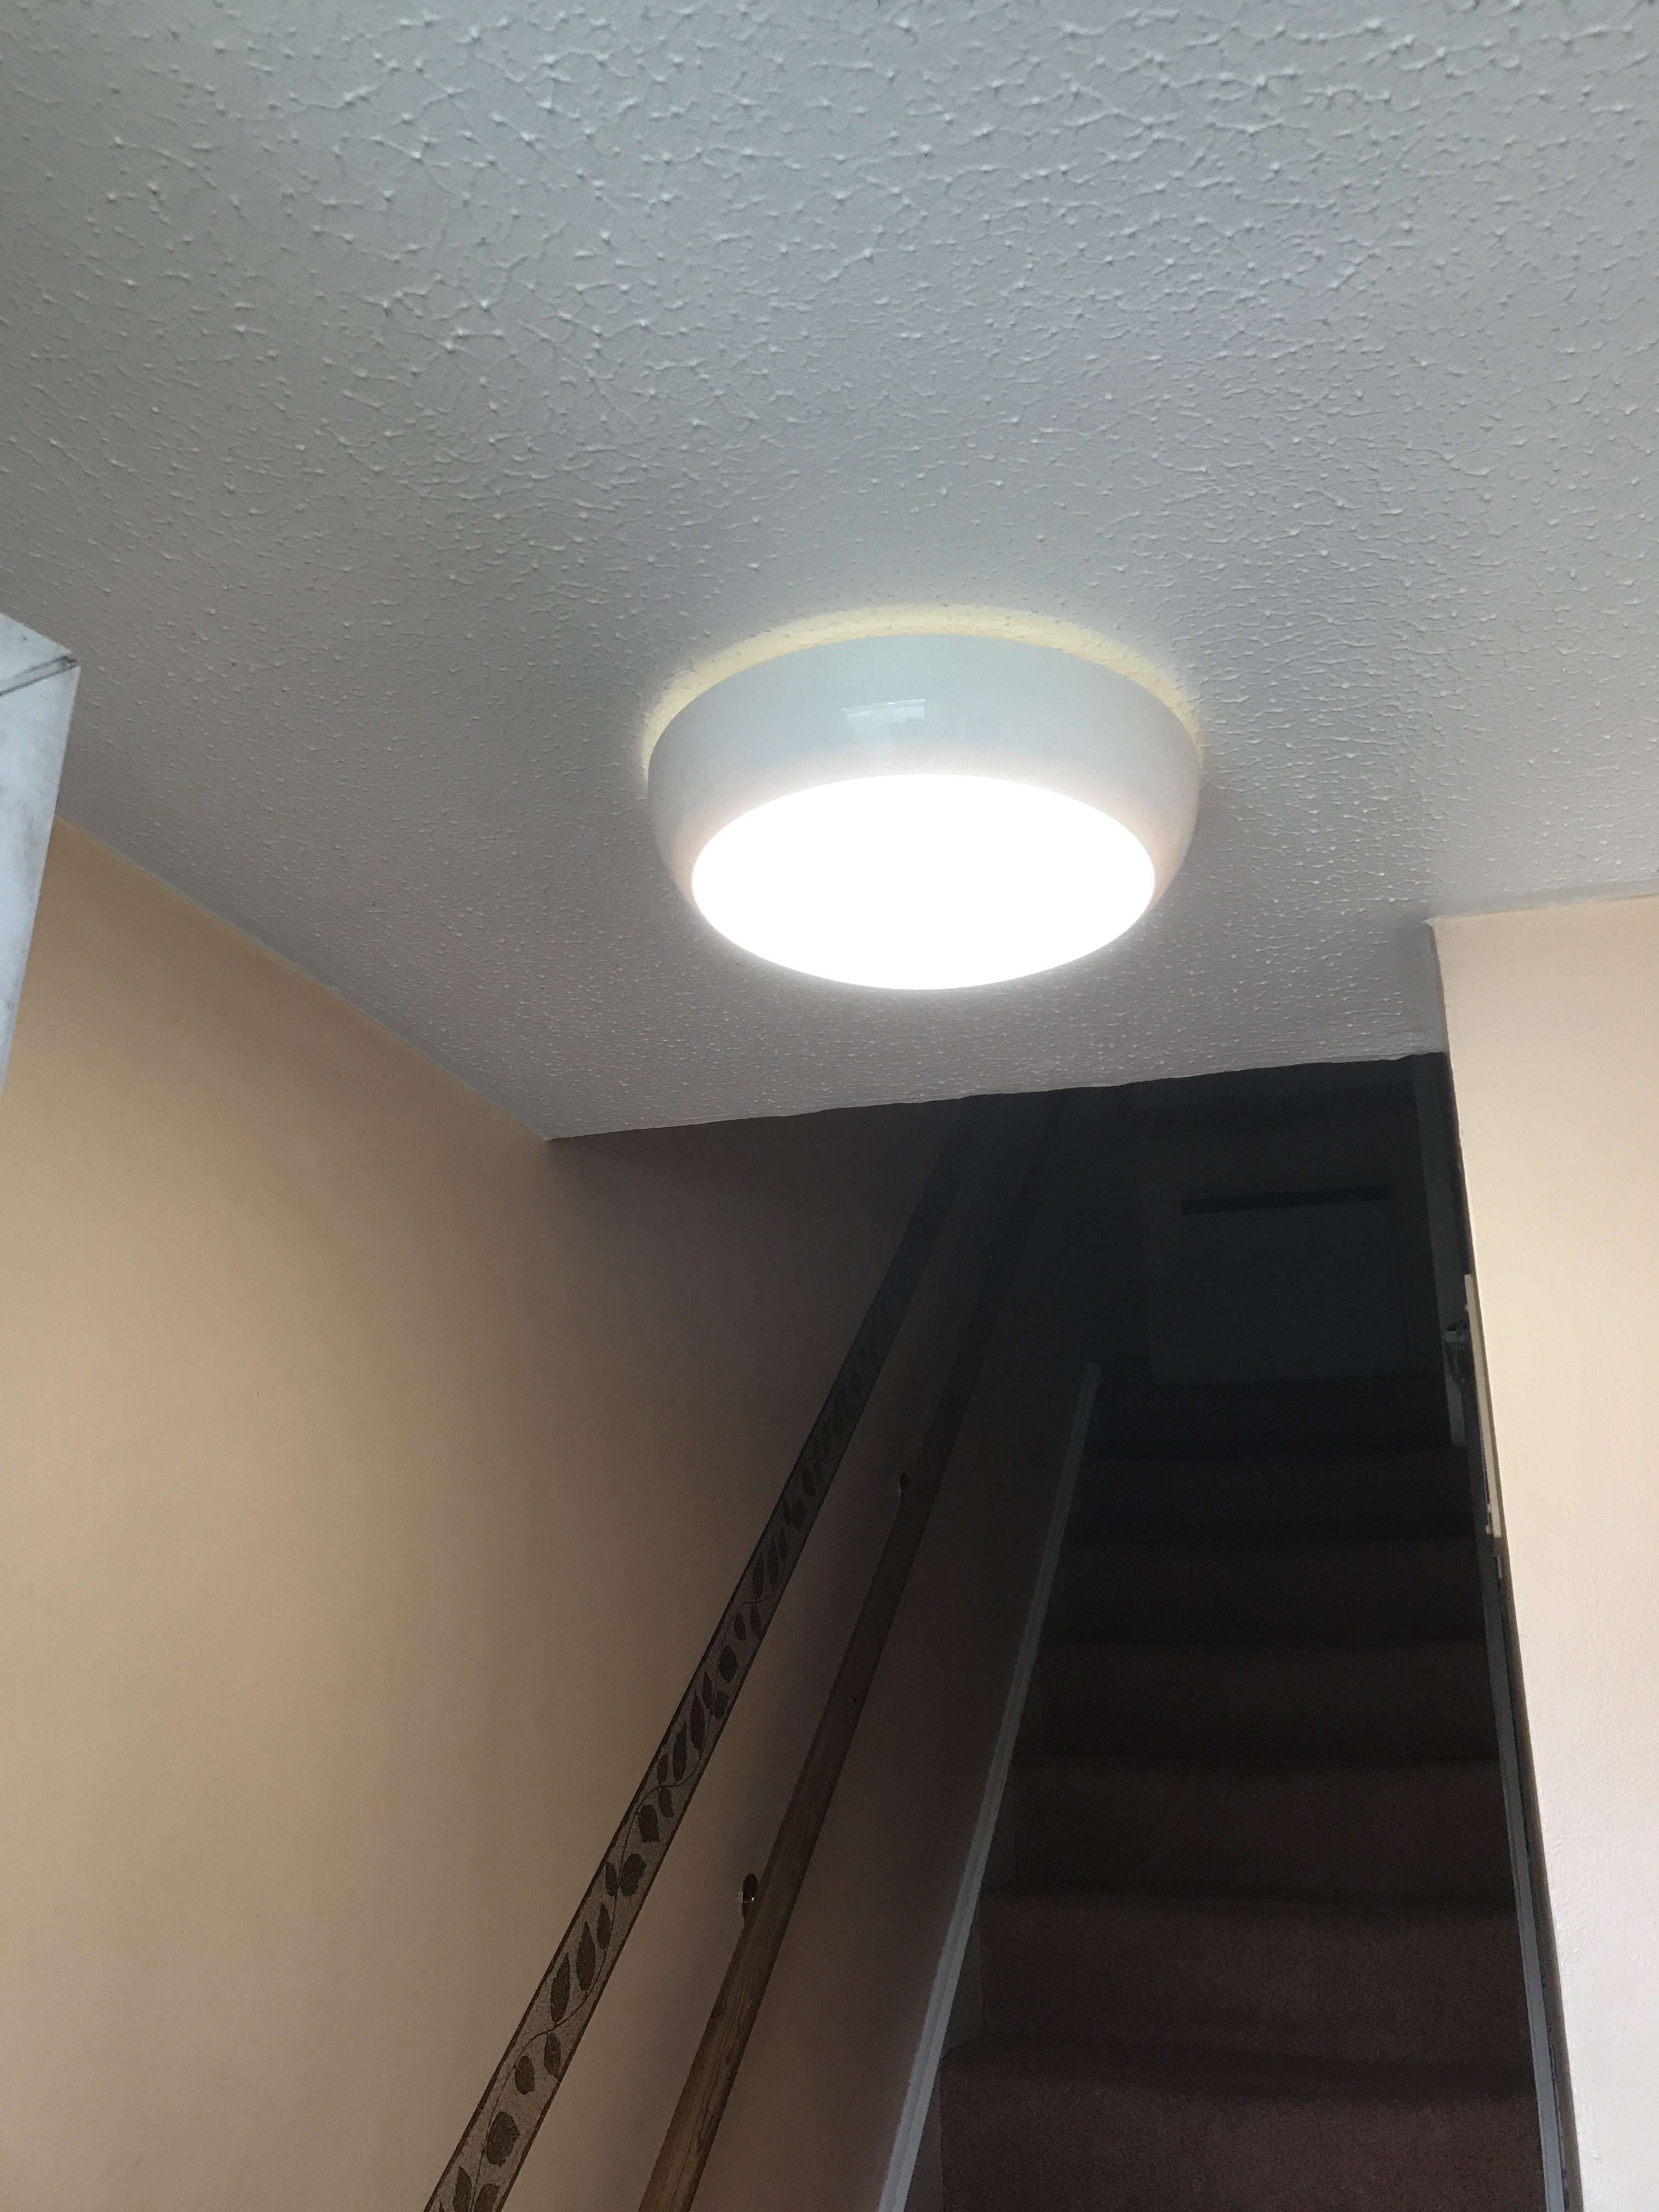 LED Light Fitting Installed in Swanley 